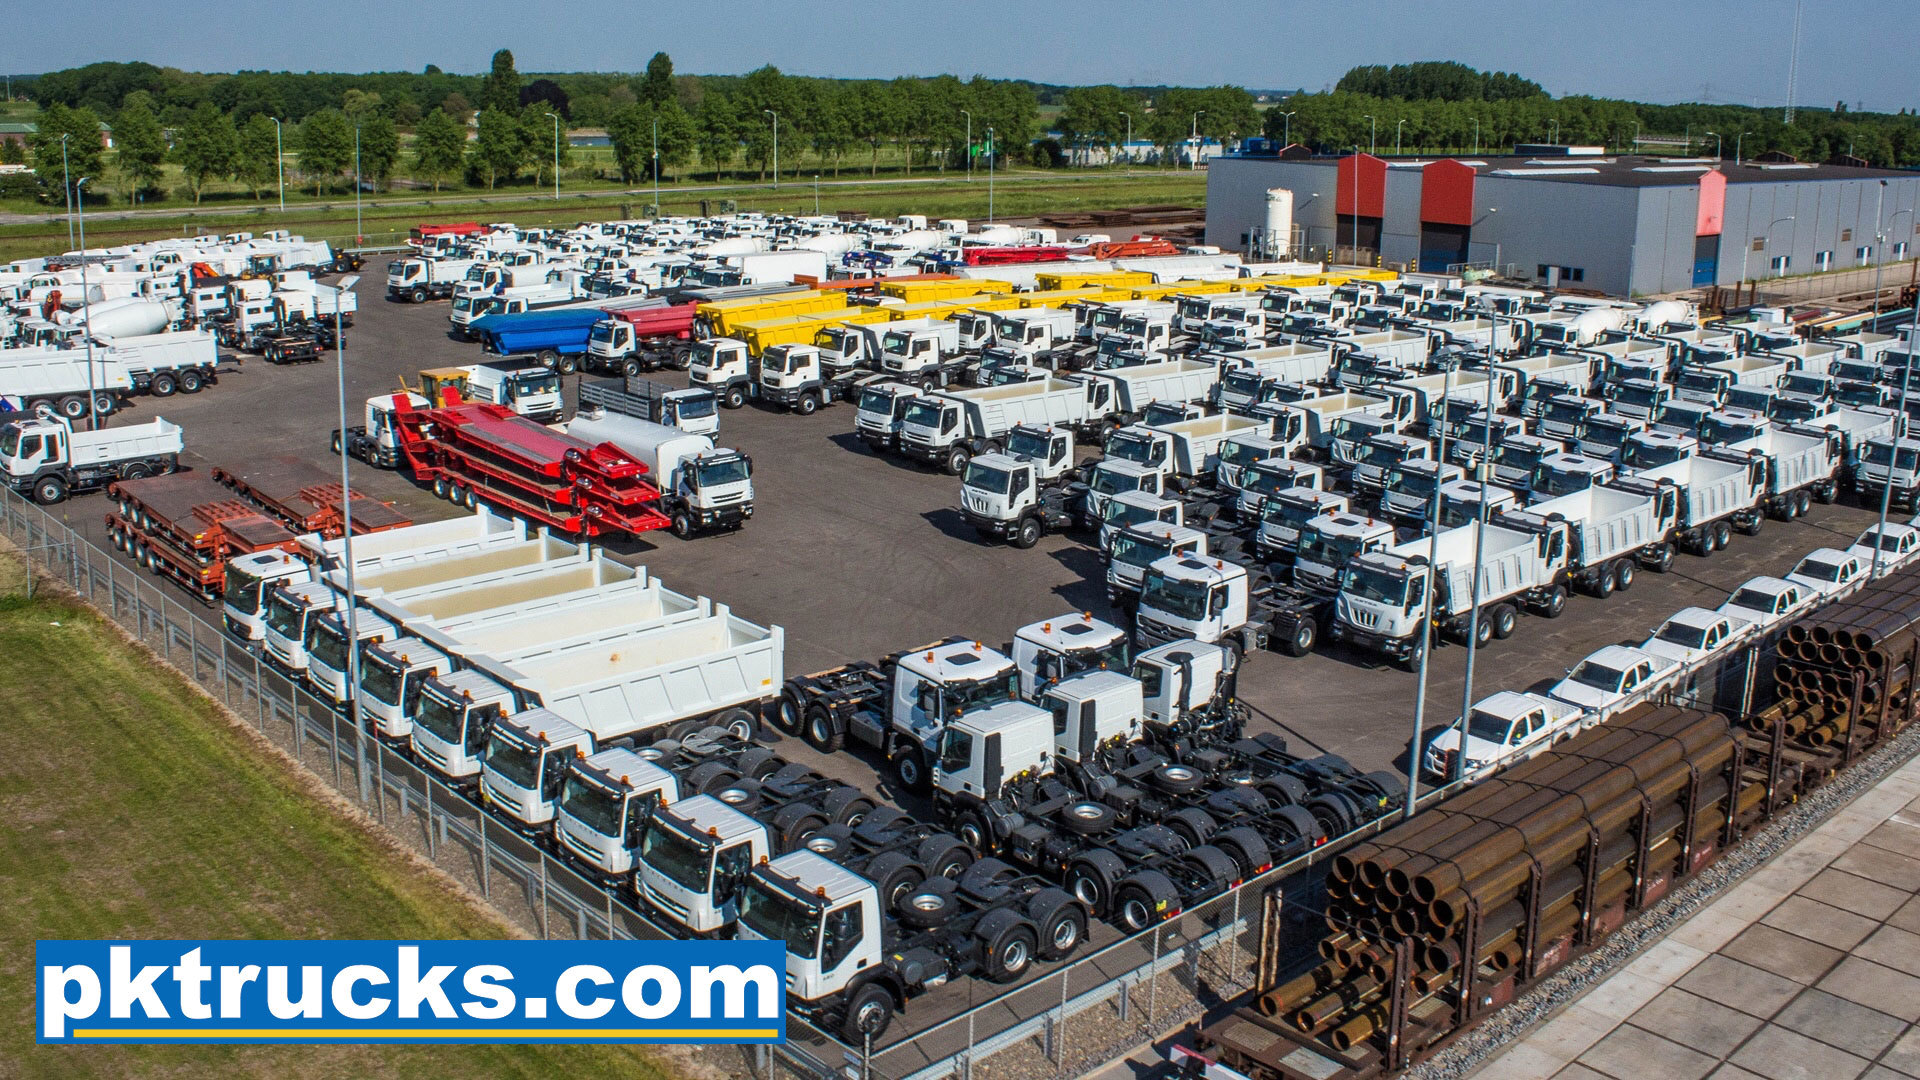 Pk trucks holland undefined: bild 3